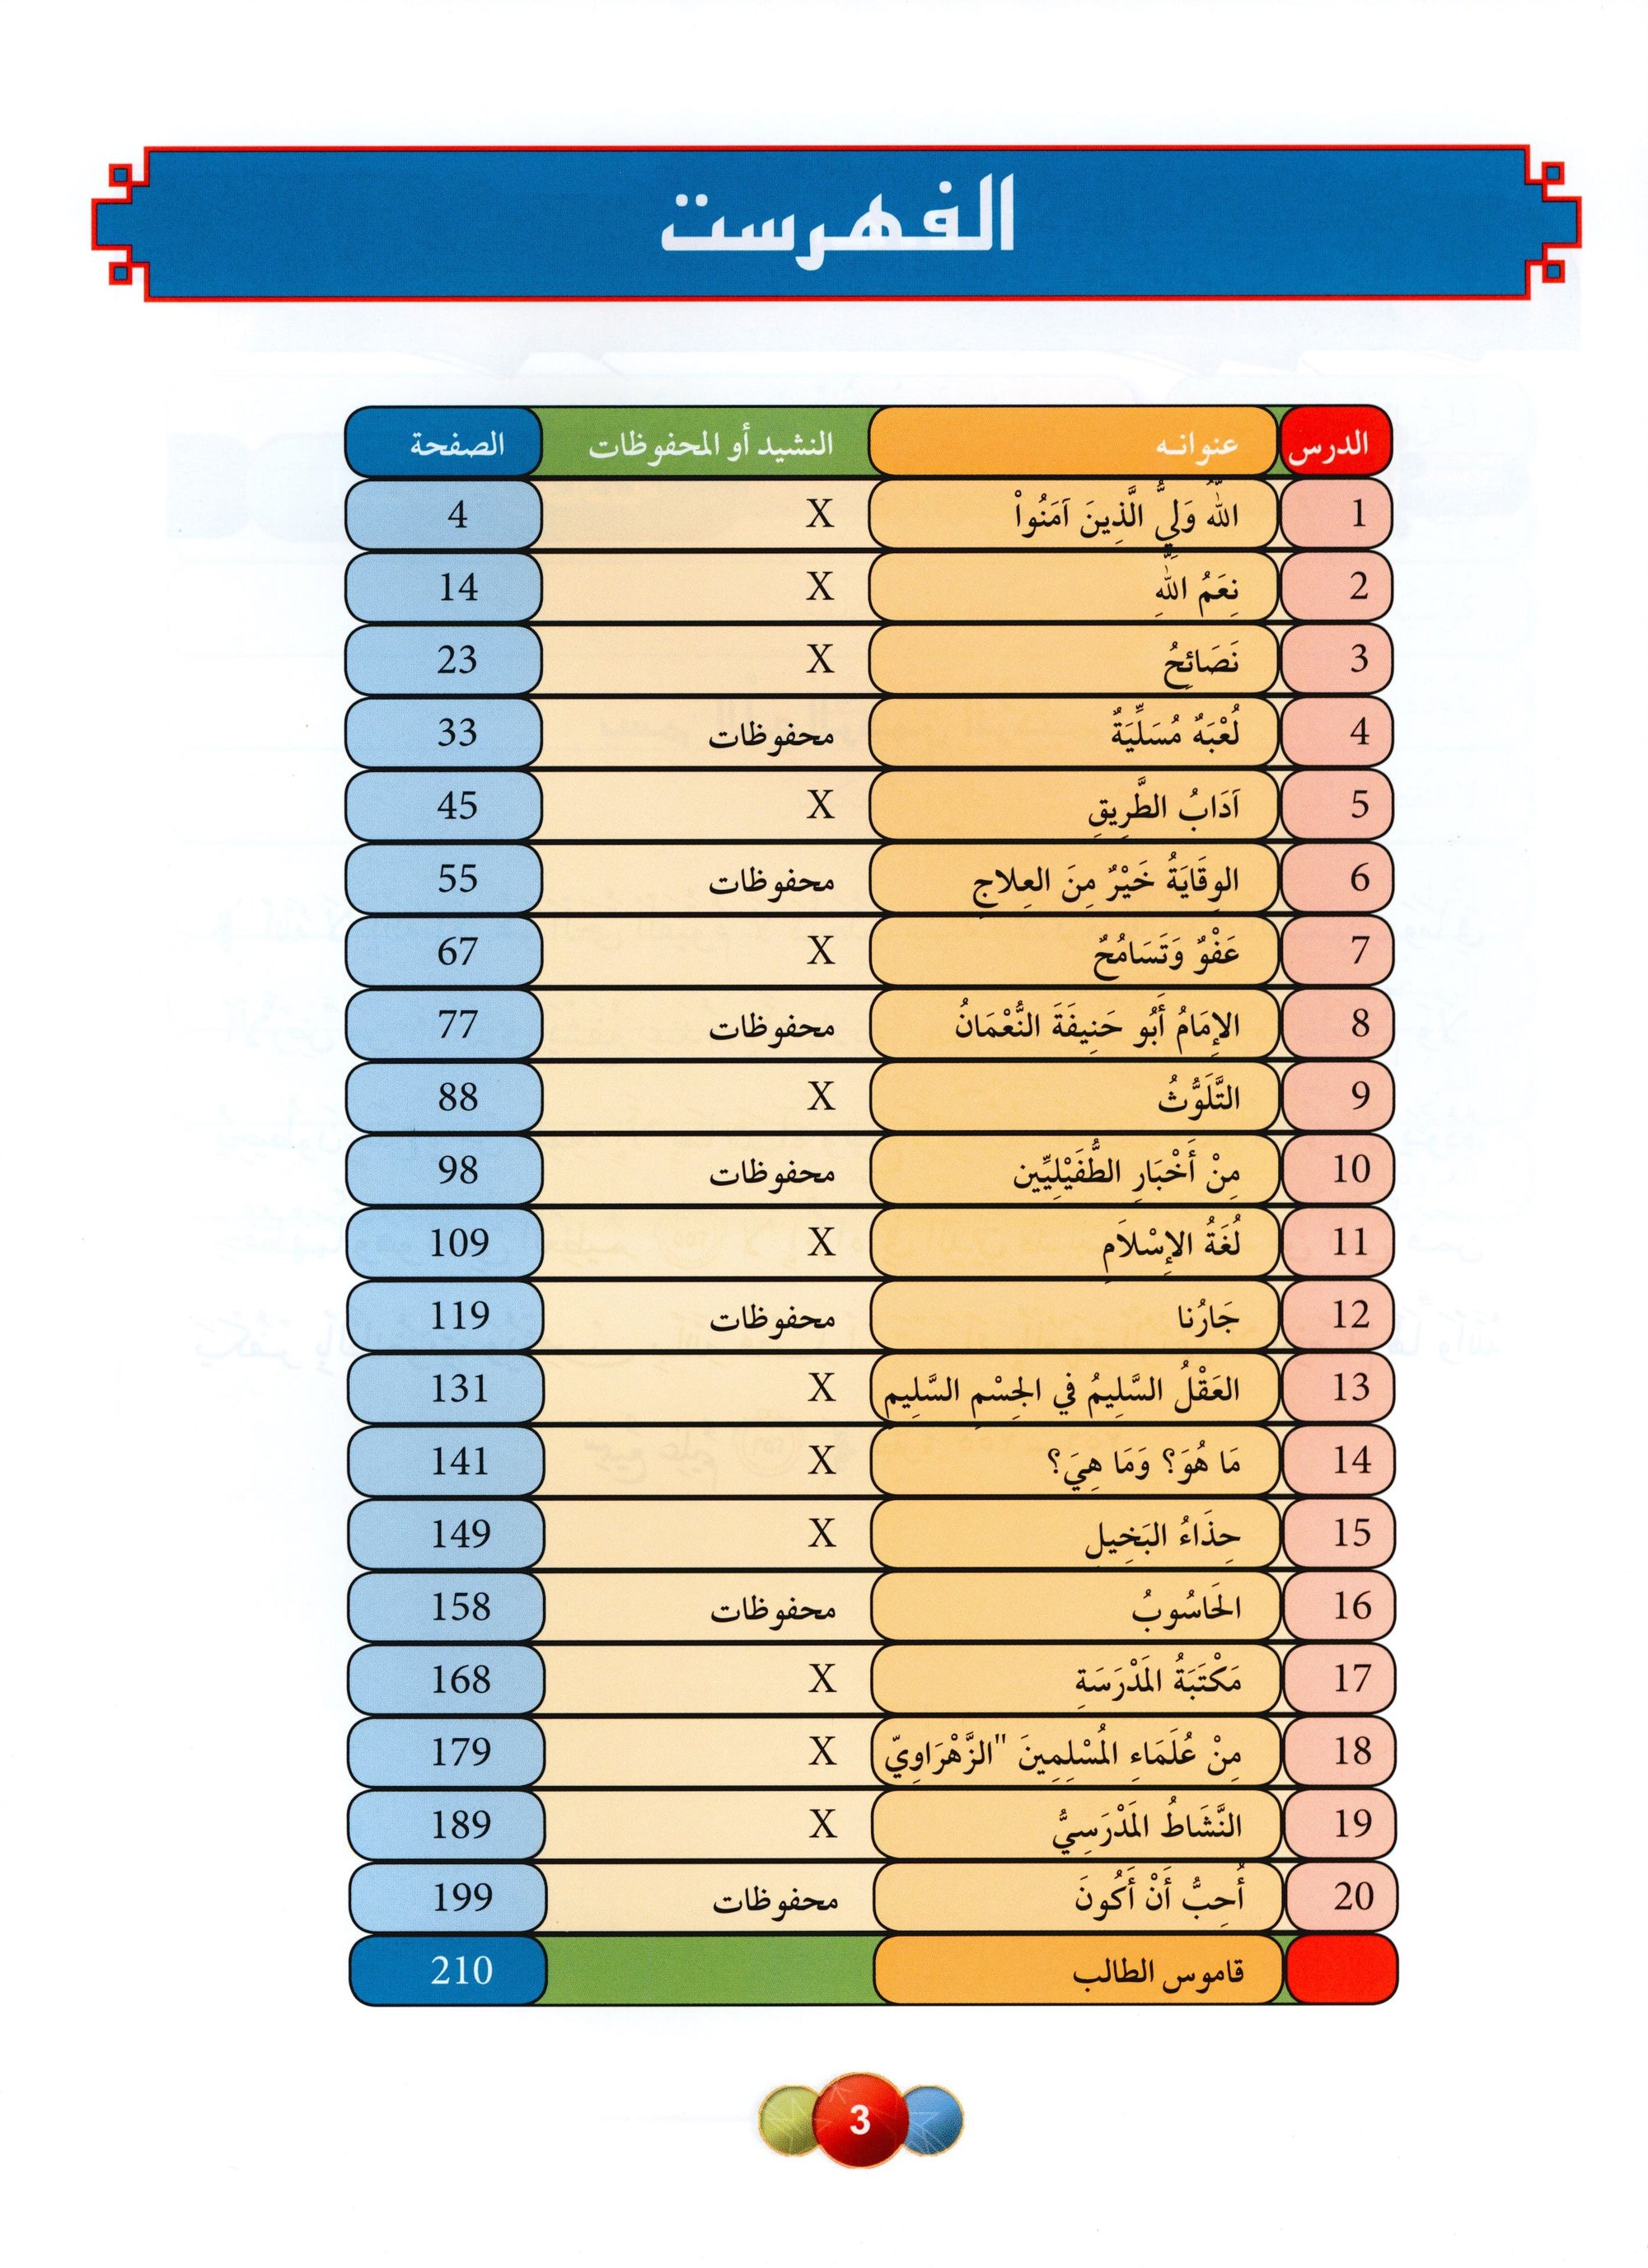 Horizons in the Arabic Language Textbook Level 6 الآفاق في اللغة العربية كتاب الطالب